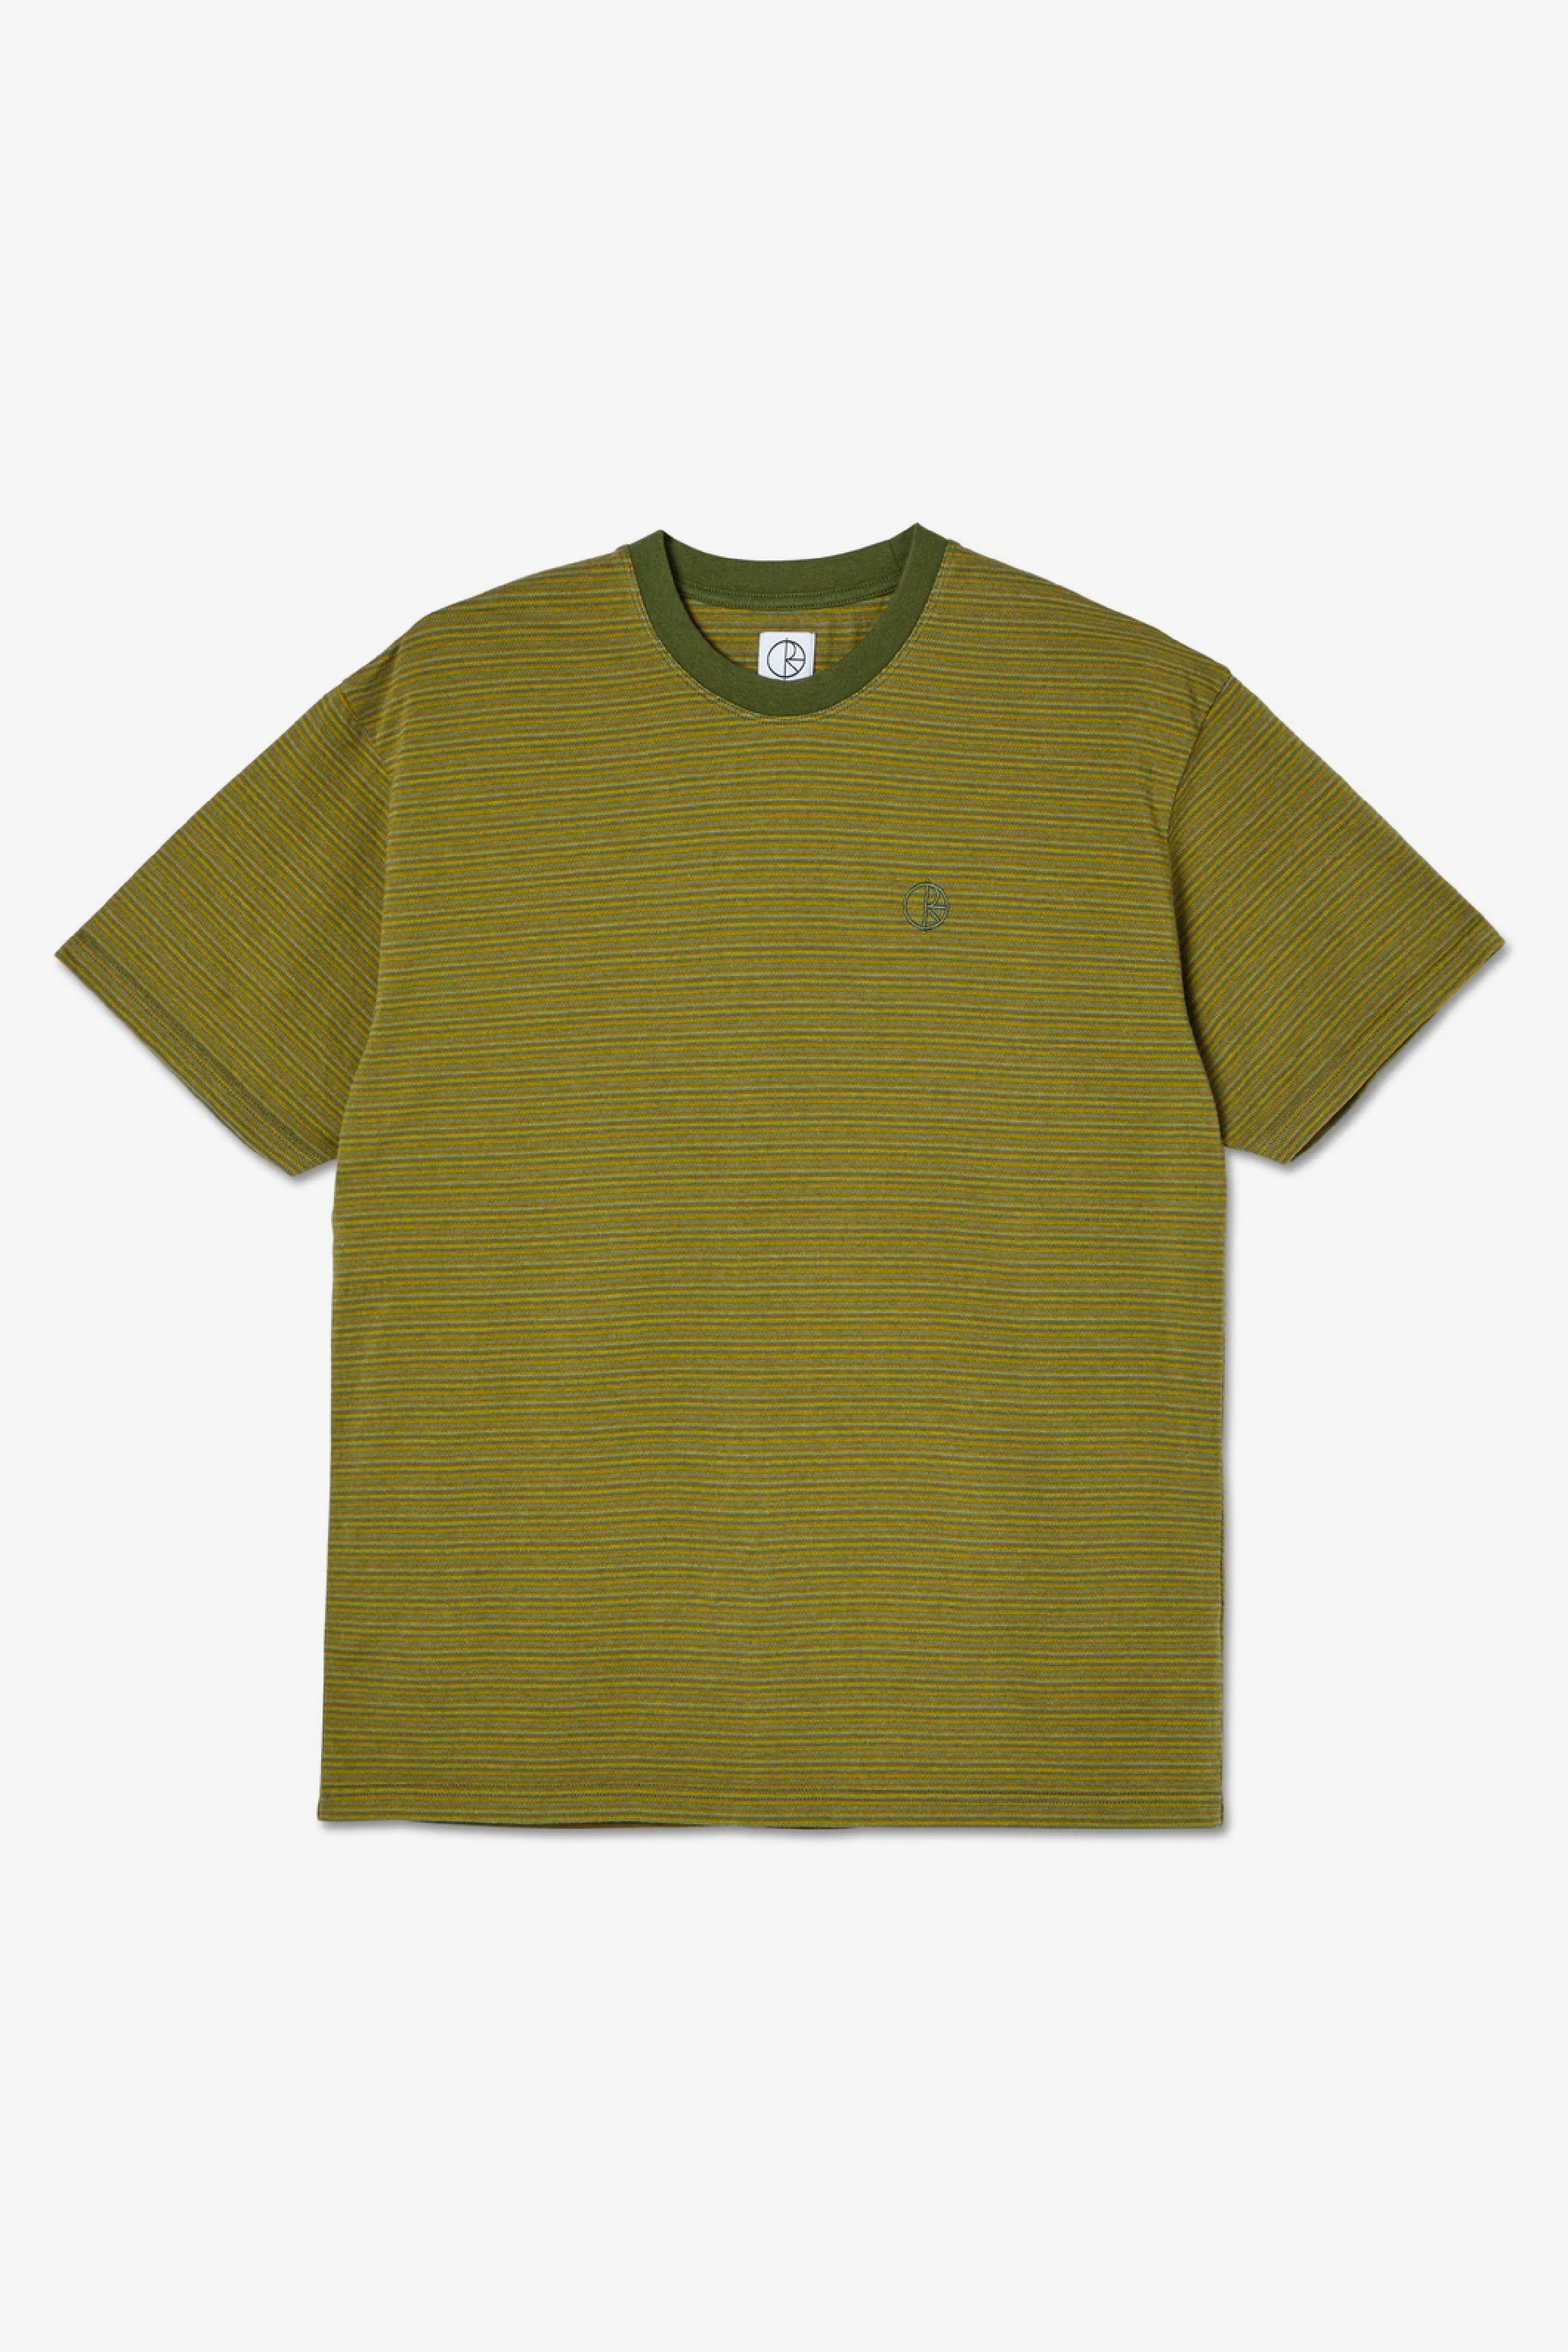 Selectshop FRAME - POLAR SKATE CO. Dizzy Stripe Tee T-Shirts Dubai